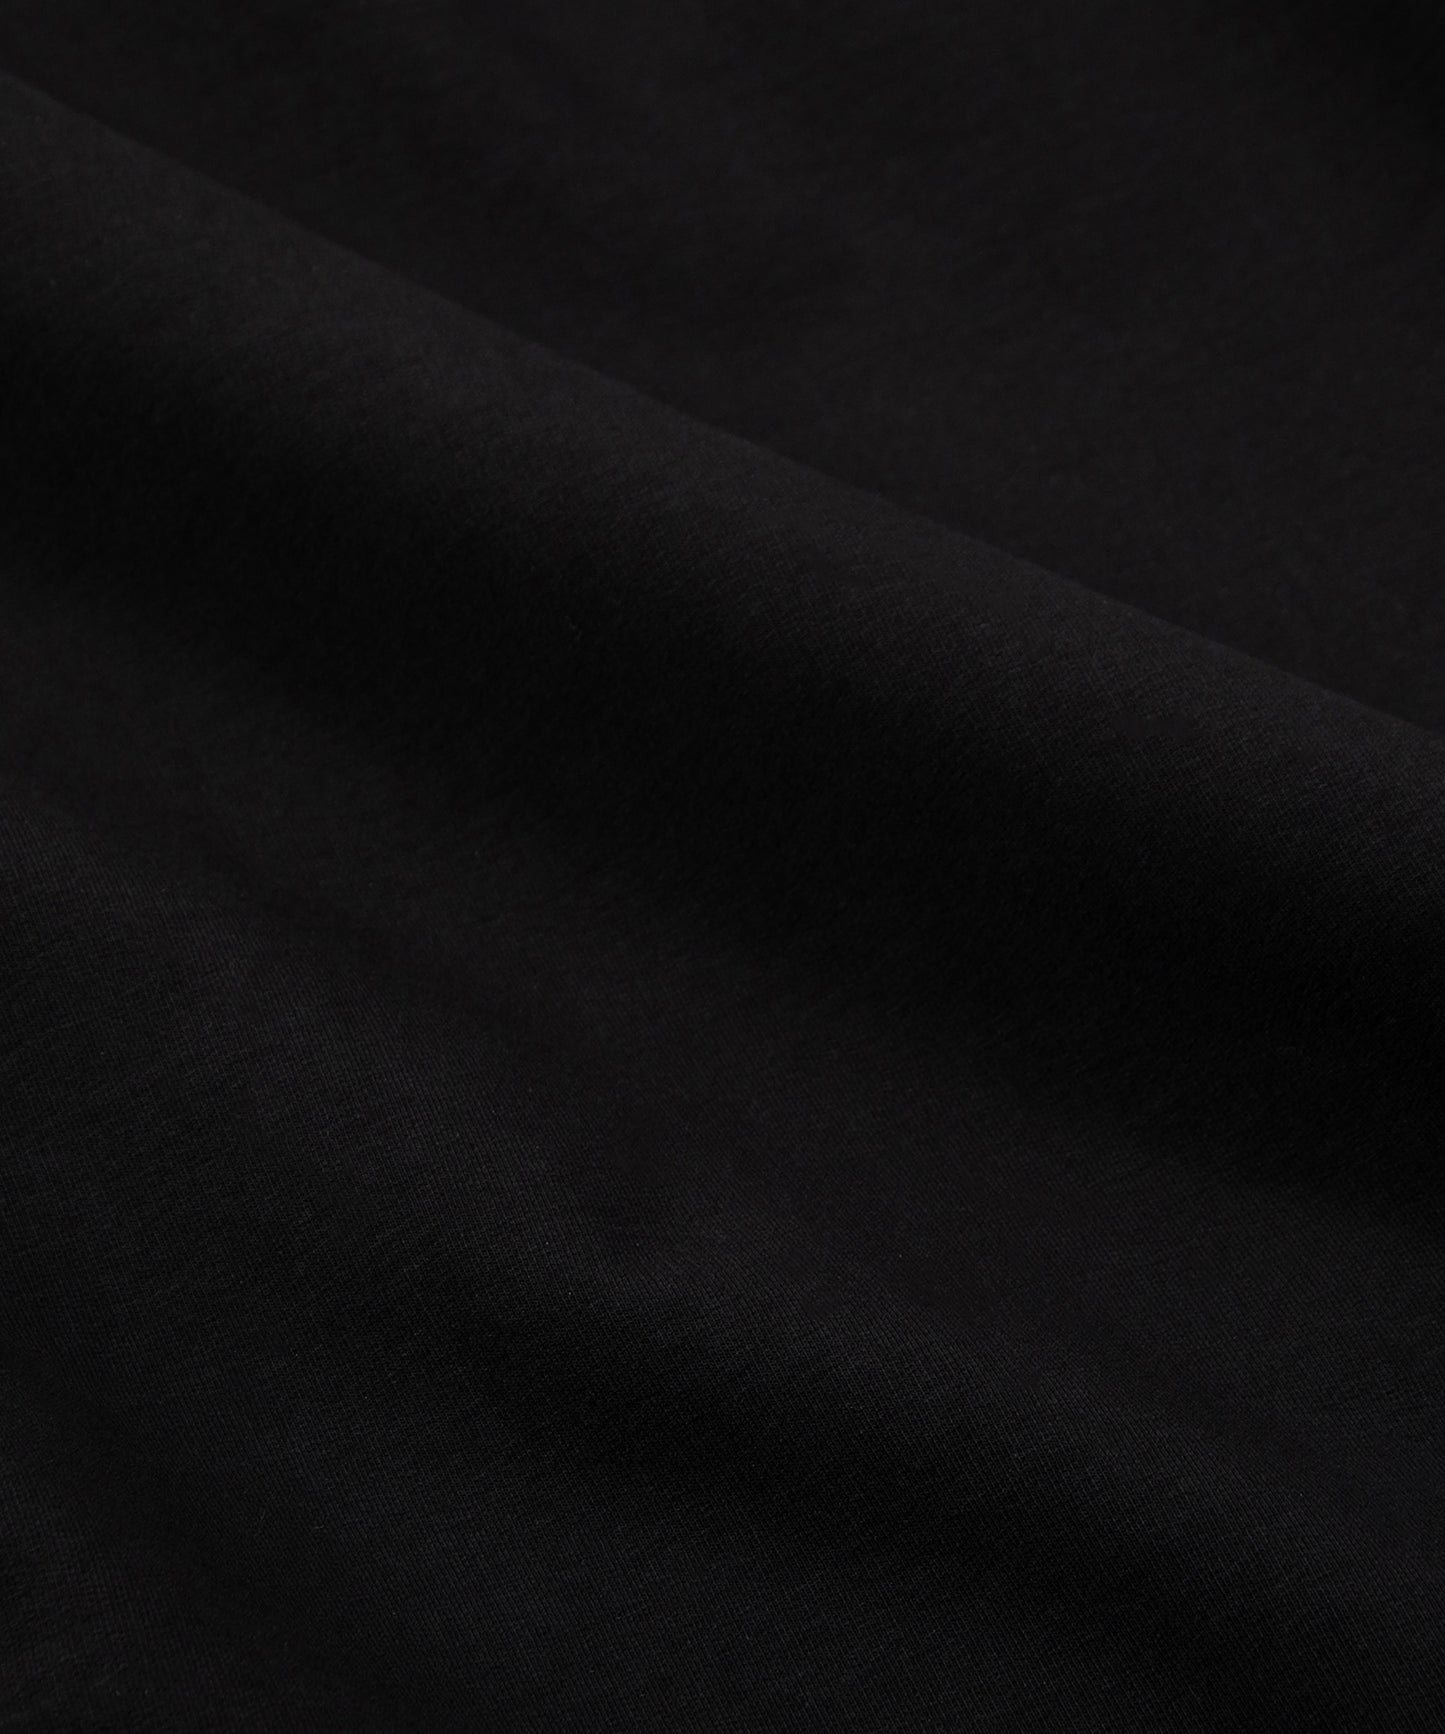 CUSTOM_ALT_TEXT: Fabric closeup on Paper Planes Stash Box Hoodie, color Black.